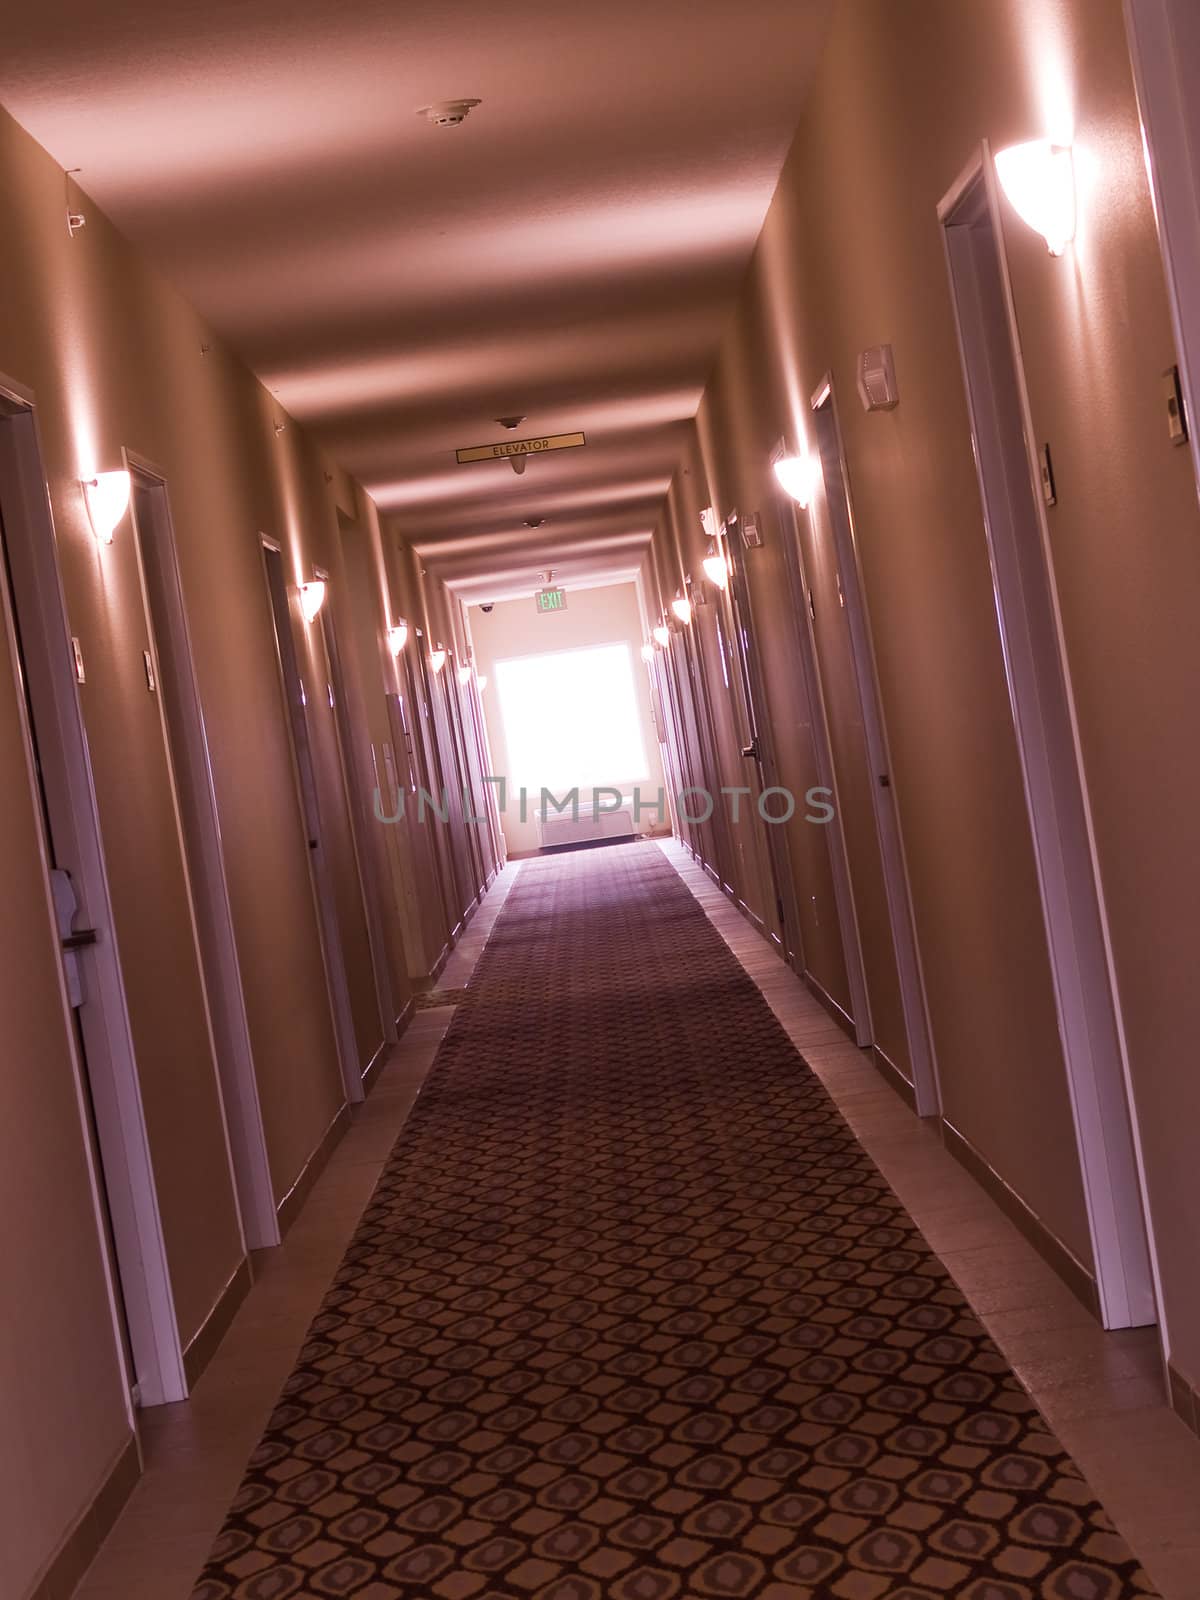 Empty, crooked hotel corridor in monochrome pink color tone